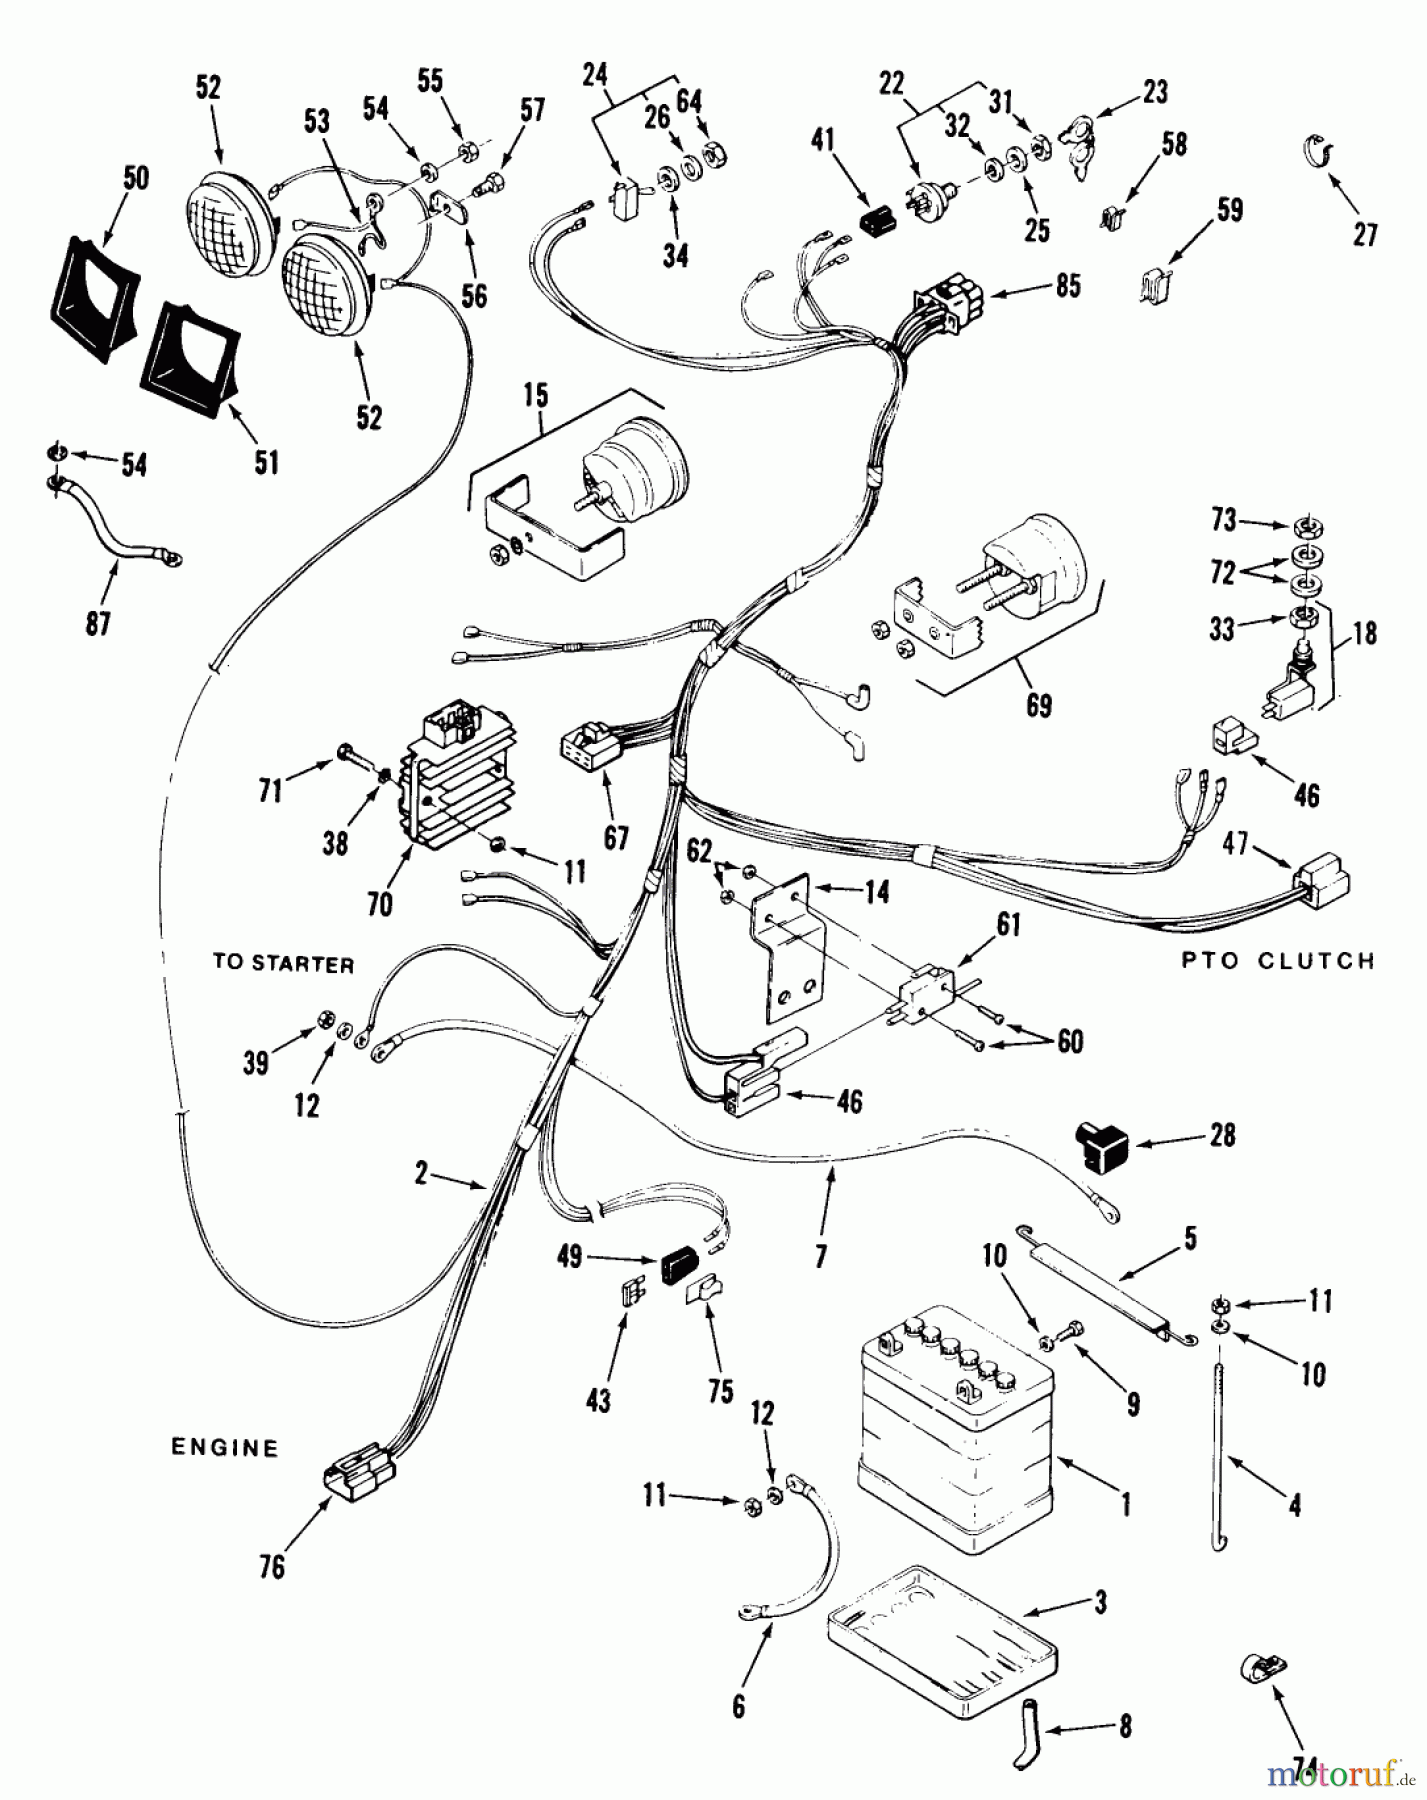  Toro Neu Mowers, Lawn & Garden Tractor Seite 2 E2-17K502 (227-5) - Toro 227-5 Tractor, 1989 ELECTRICAL SYSTEM